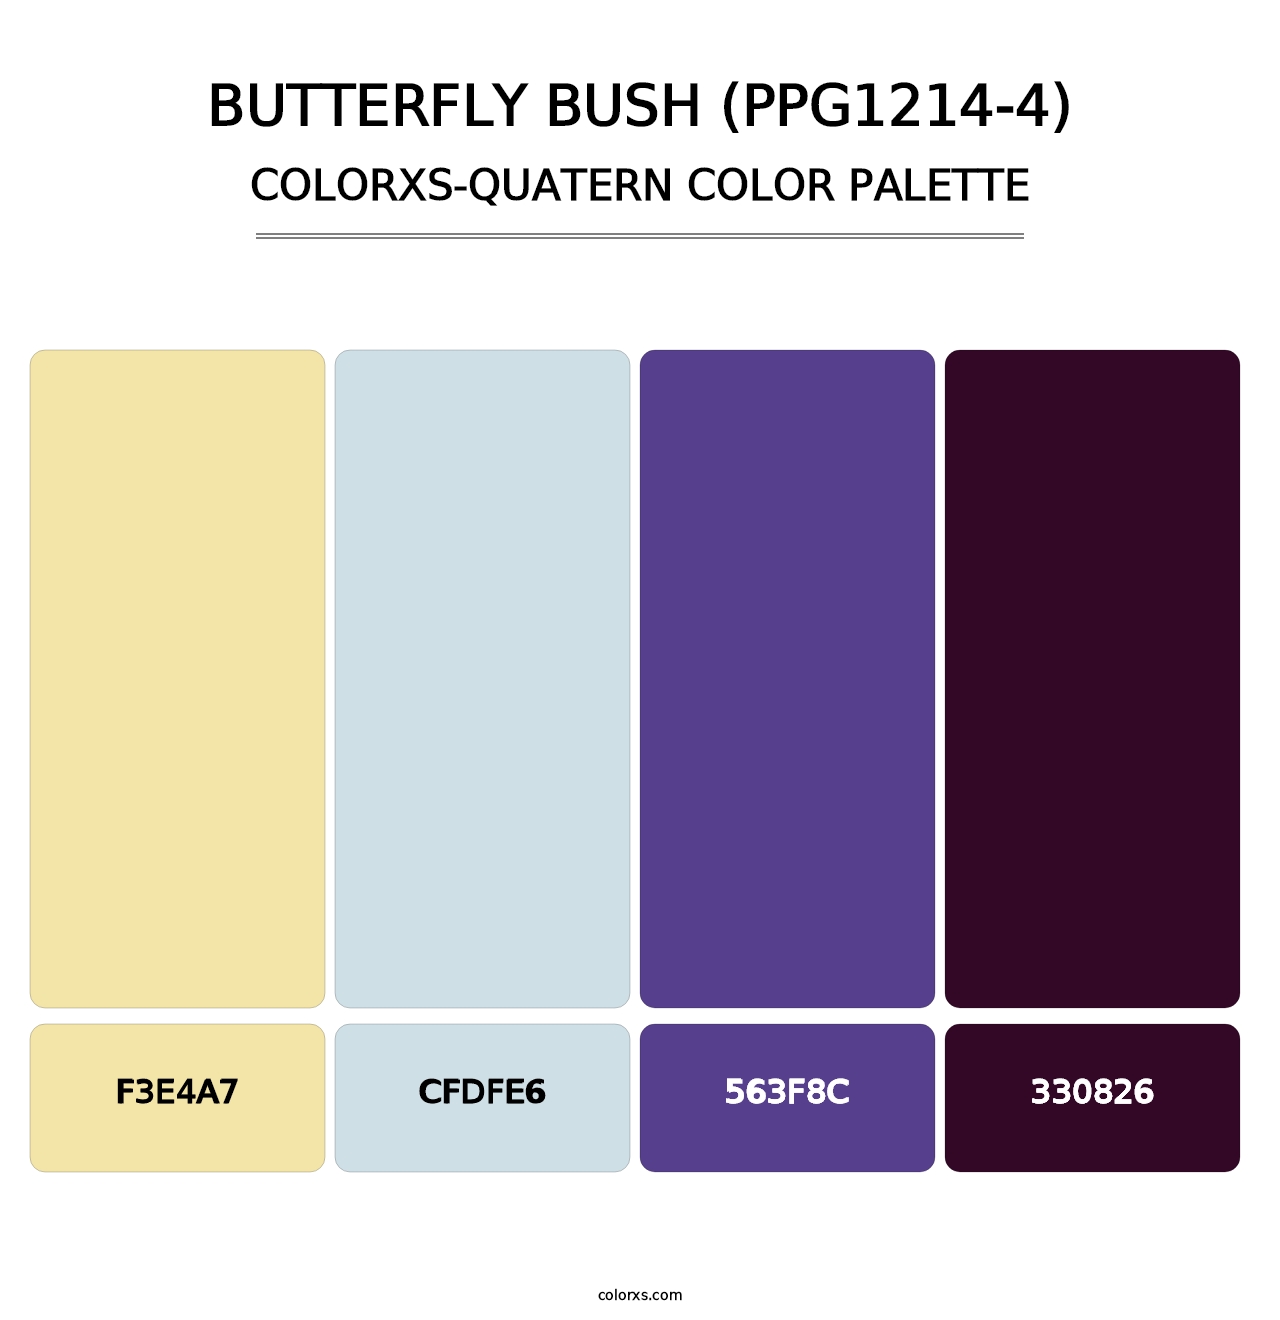 Butterfly Bush (PPG1214-4) - Colorxs Quatern Palette